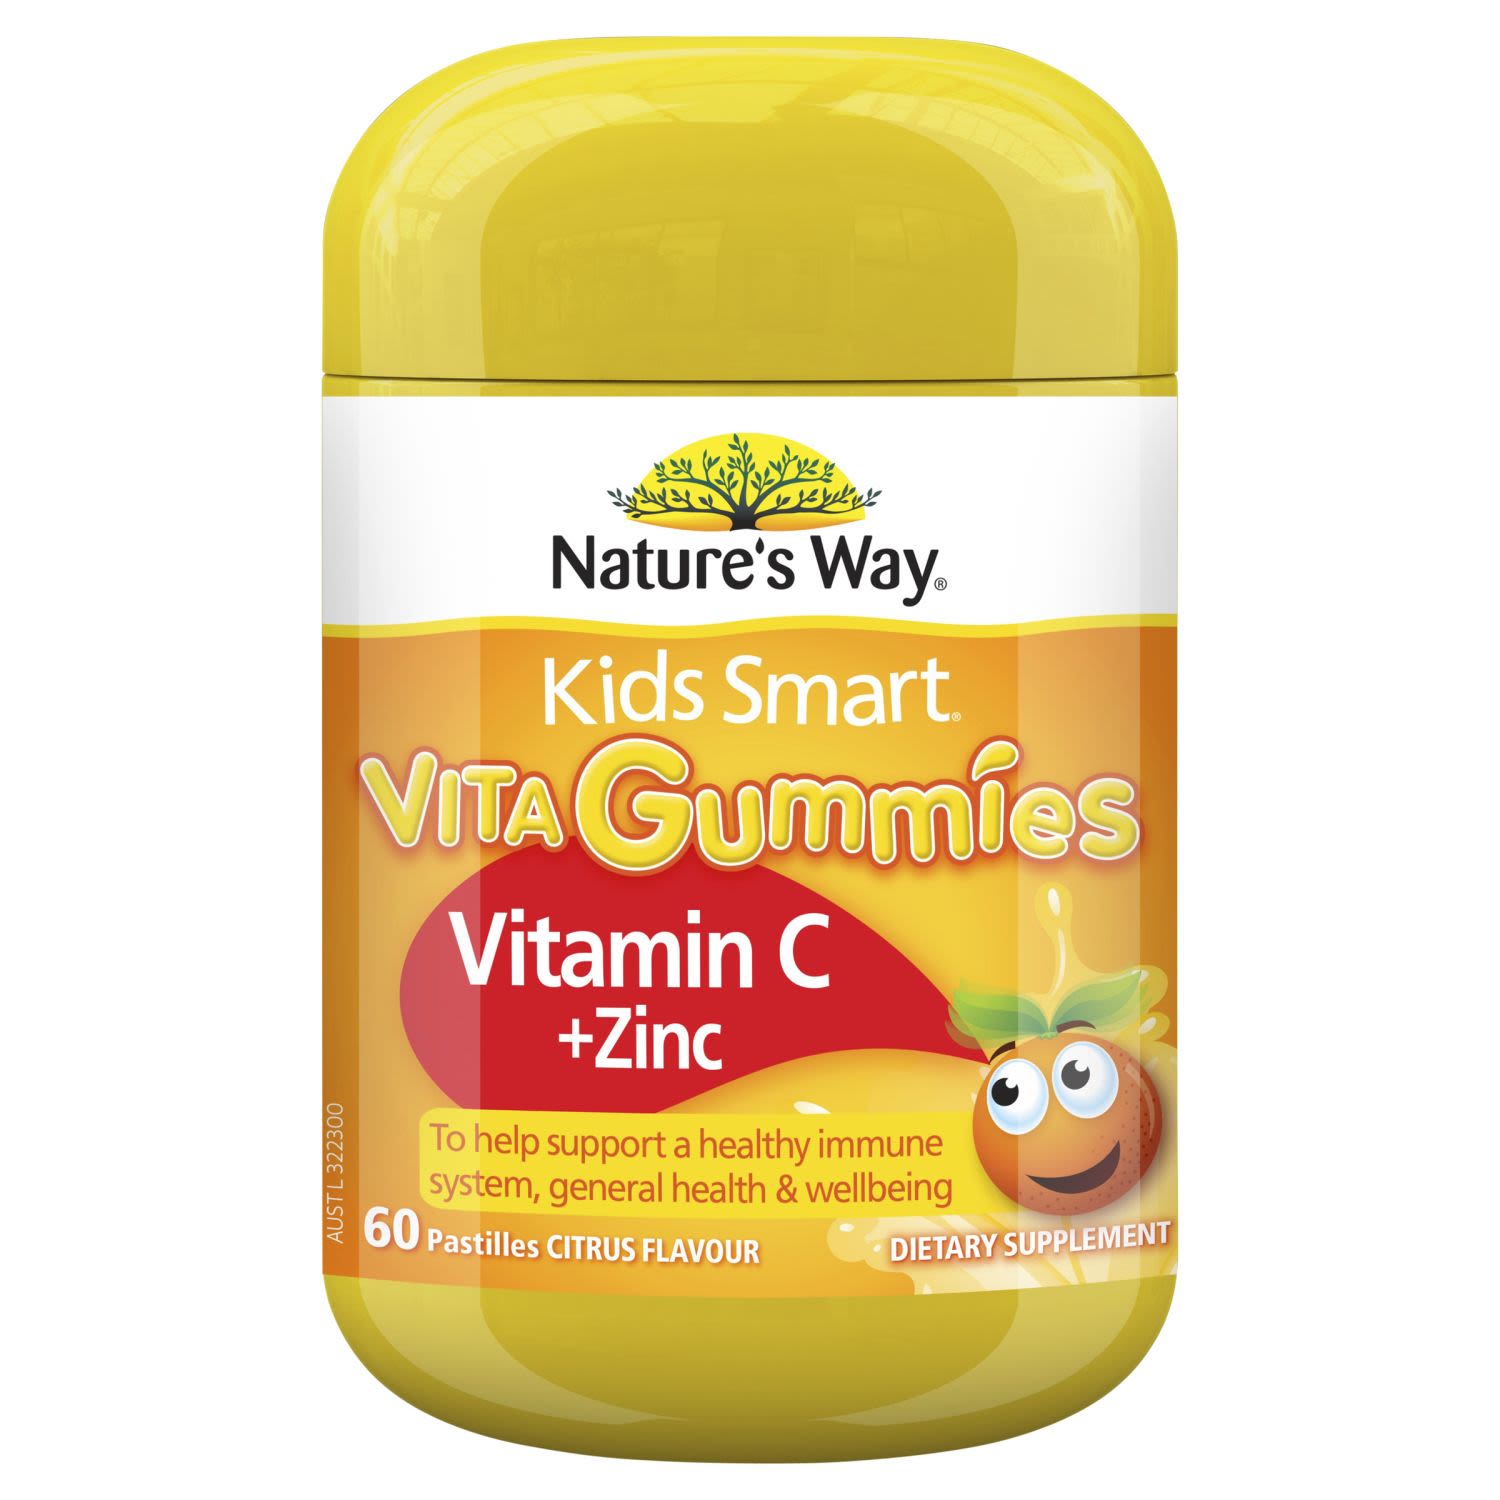 Nature's Way Kids Smart Vita Gummies Vitamin C + Zinc, 60 Each